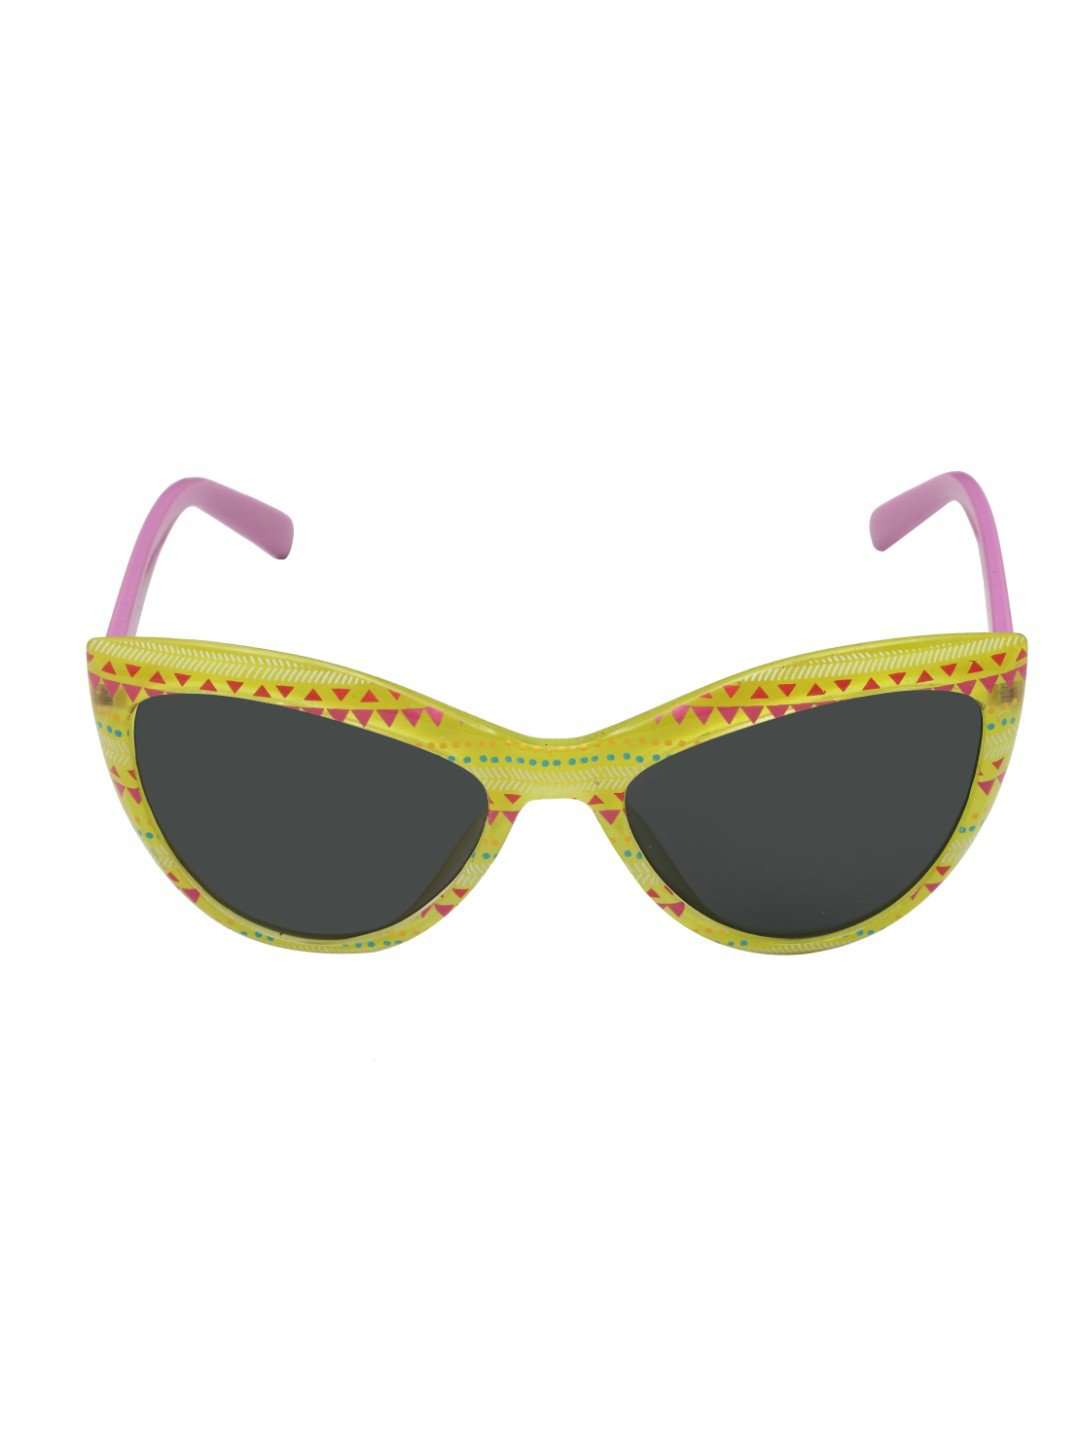 Stol'n Kids Yellow and Purple Printed Cat Eye Sunglasses - SWHF